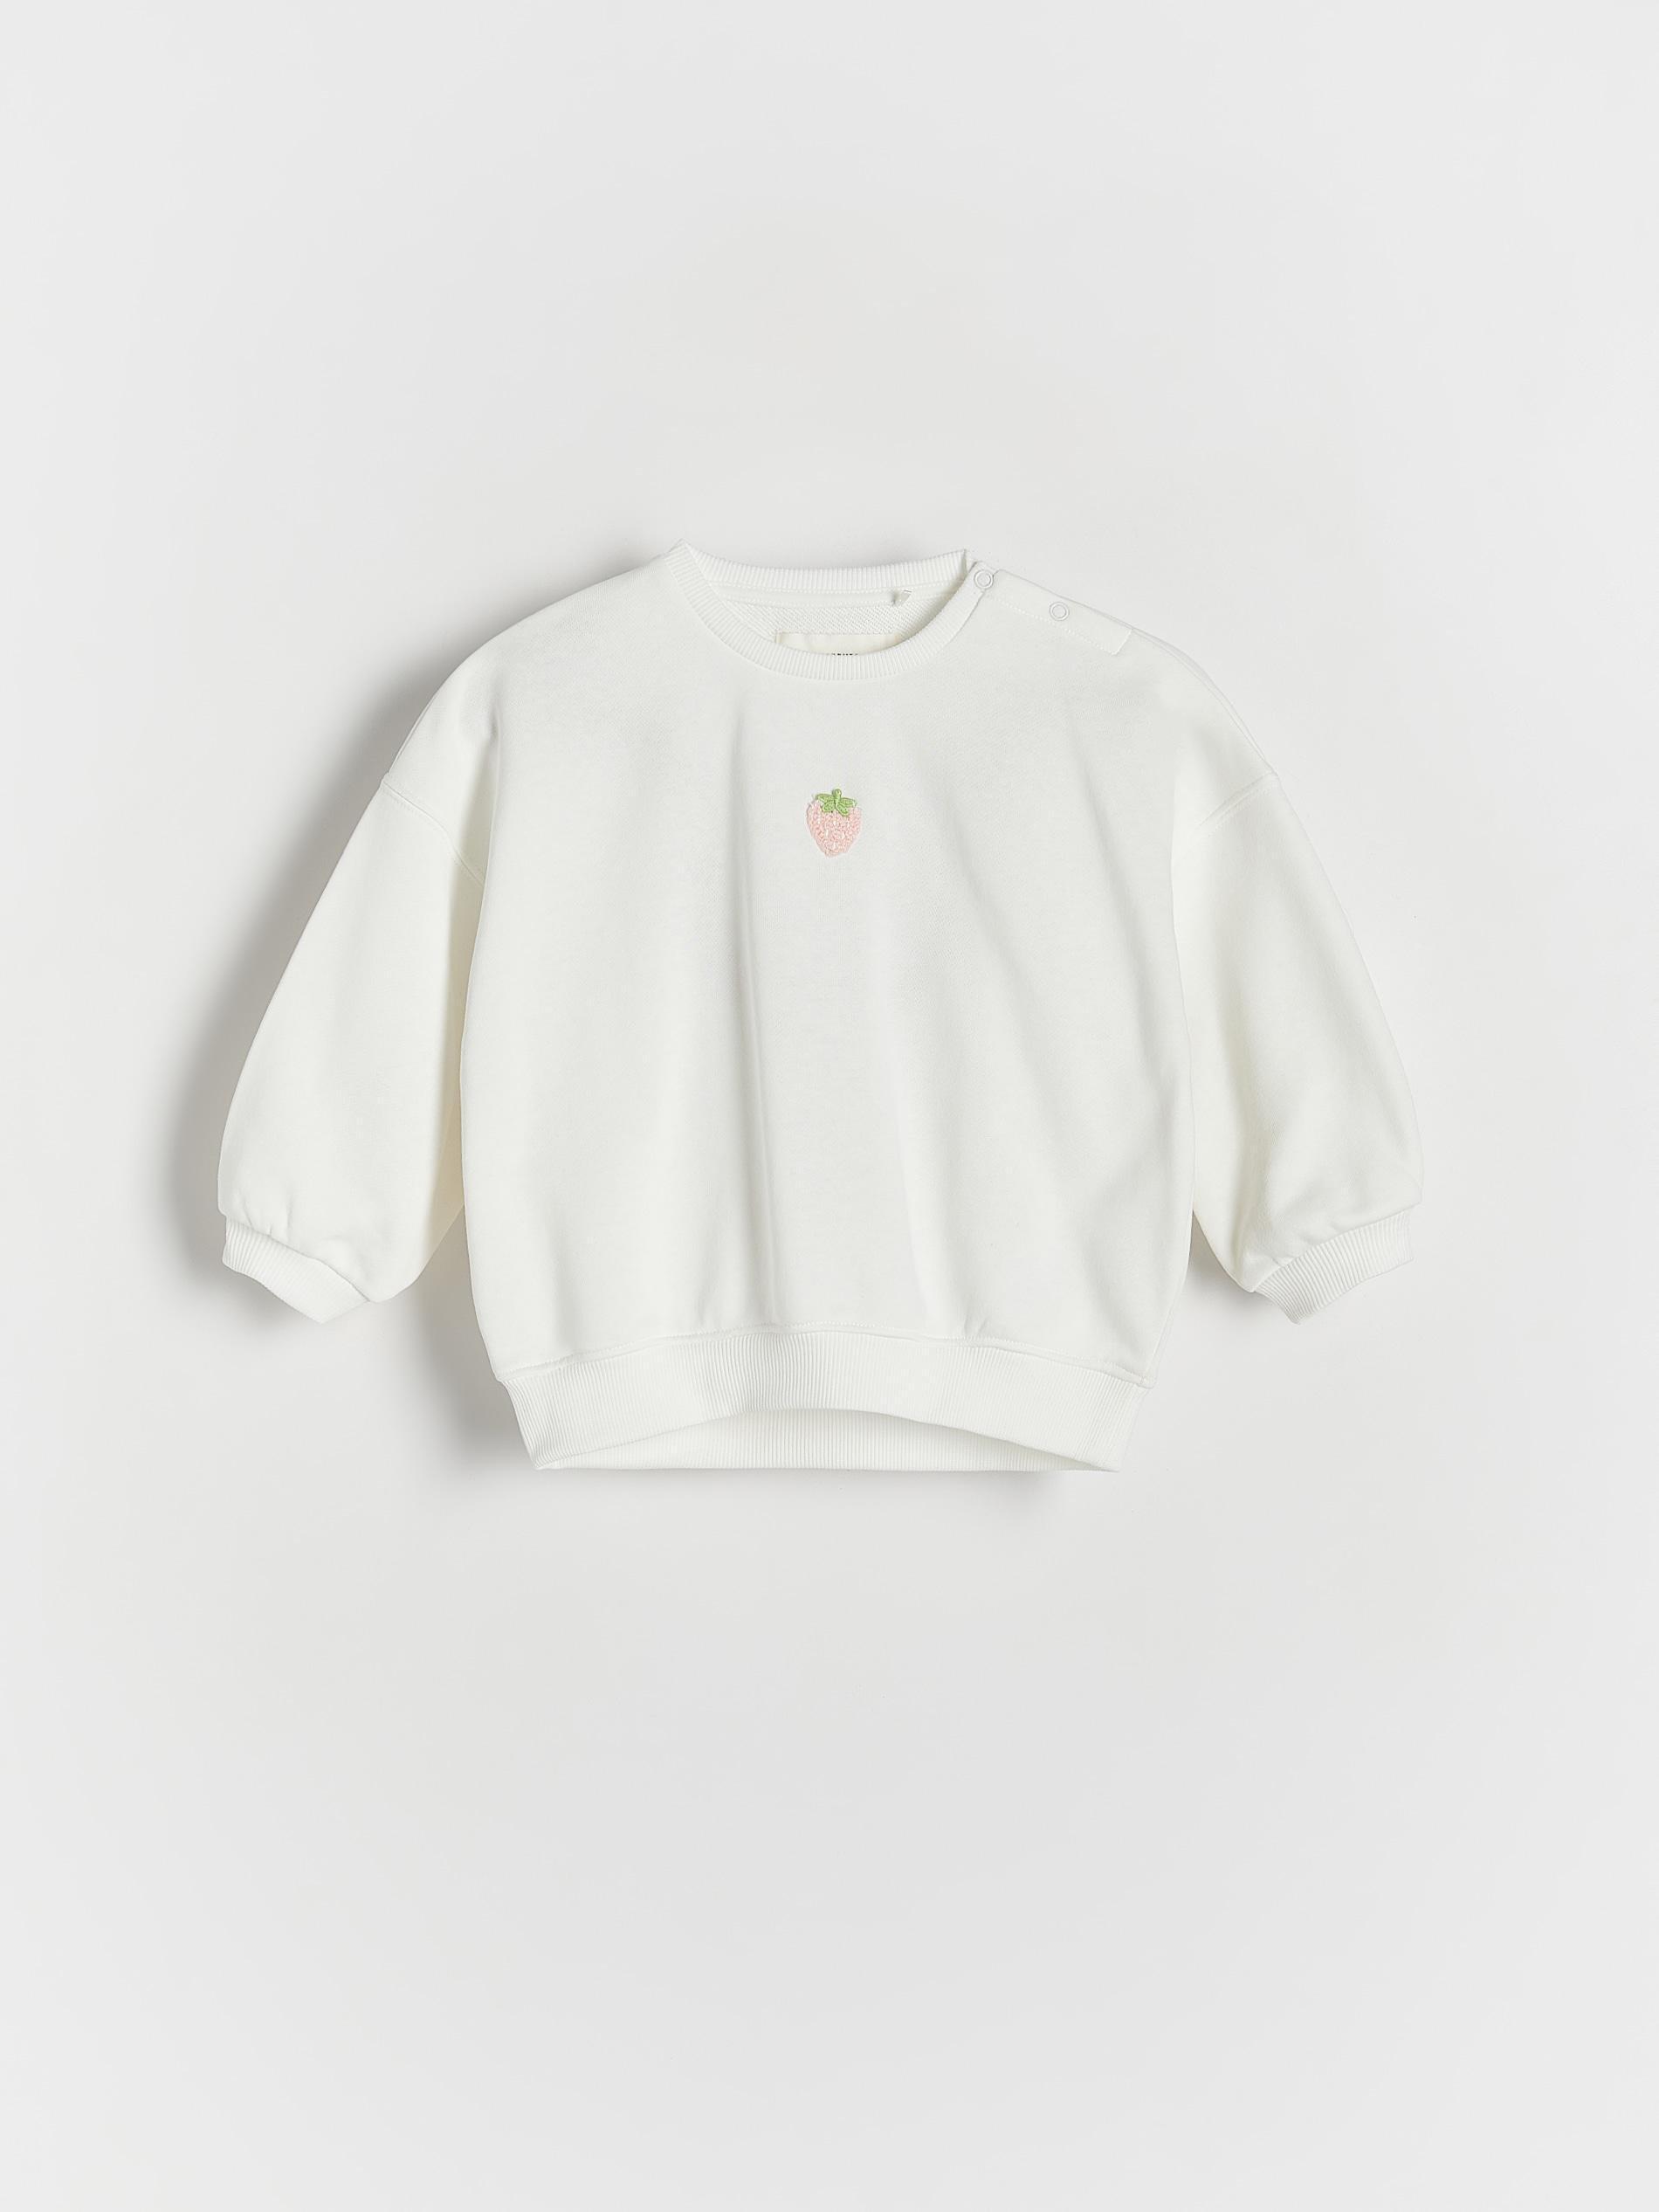 Reserved - Cream Embroidery Sweatshirt, Kids Girls